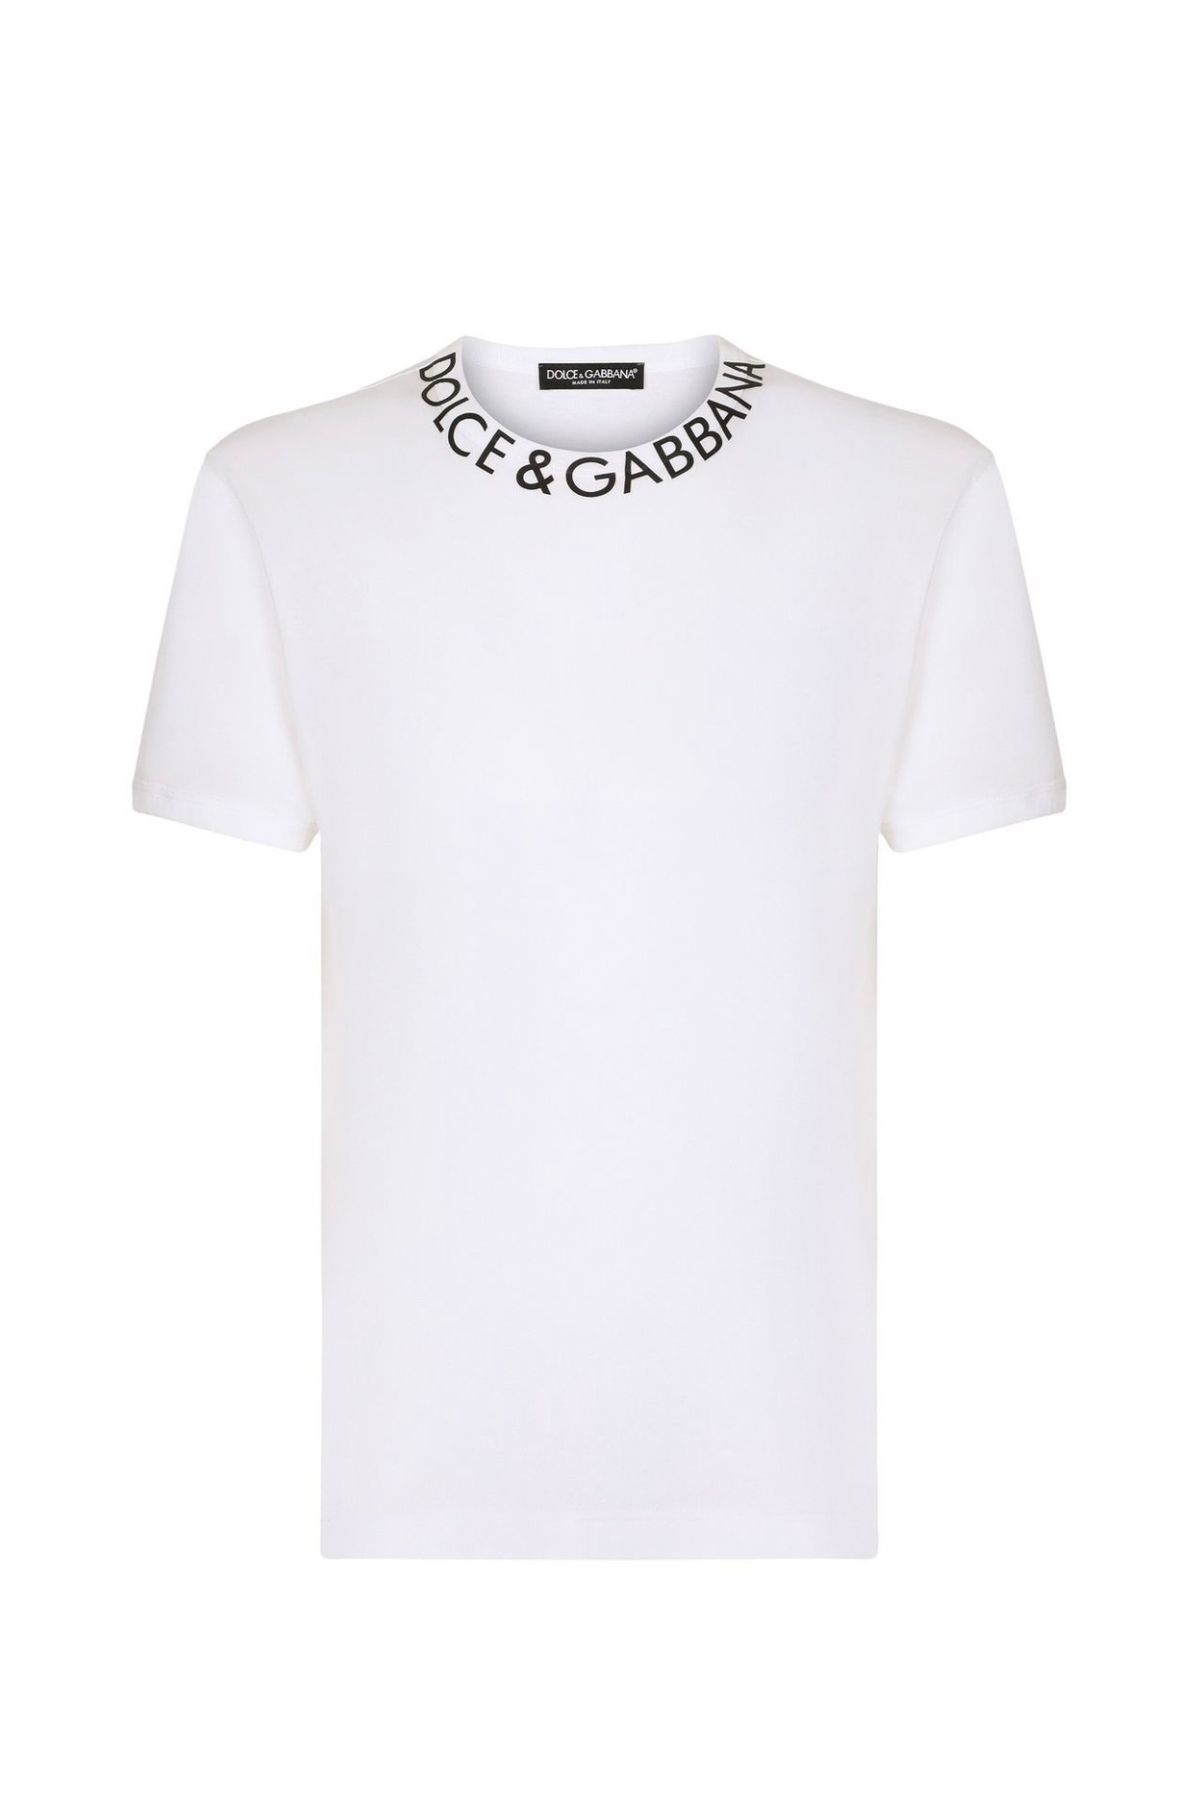 Dolce&Gabbana Round-neck Print T-shirt G8pl1tfu7eq